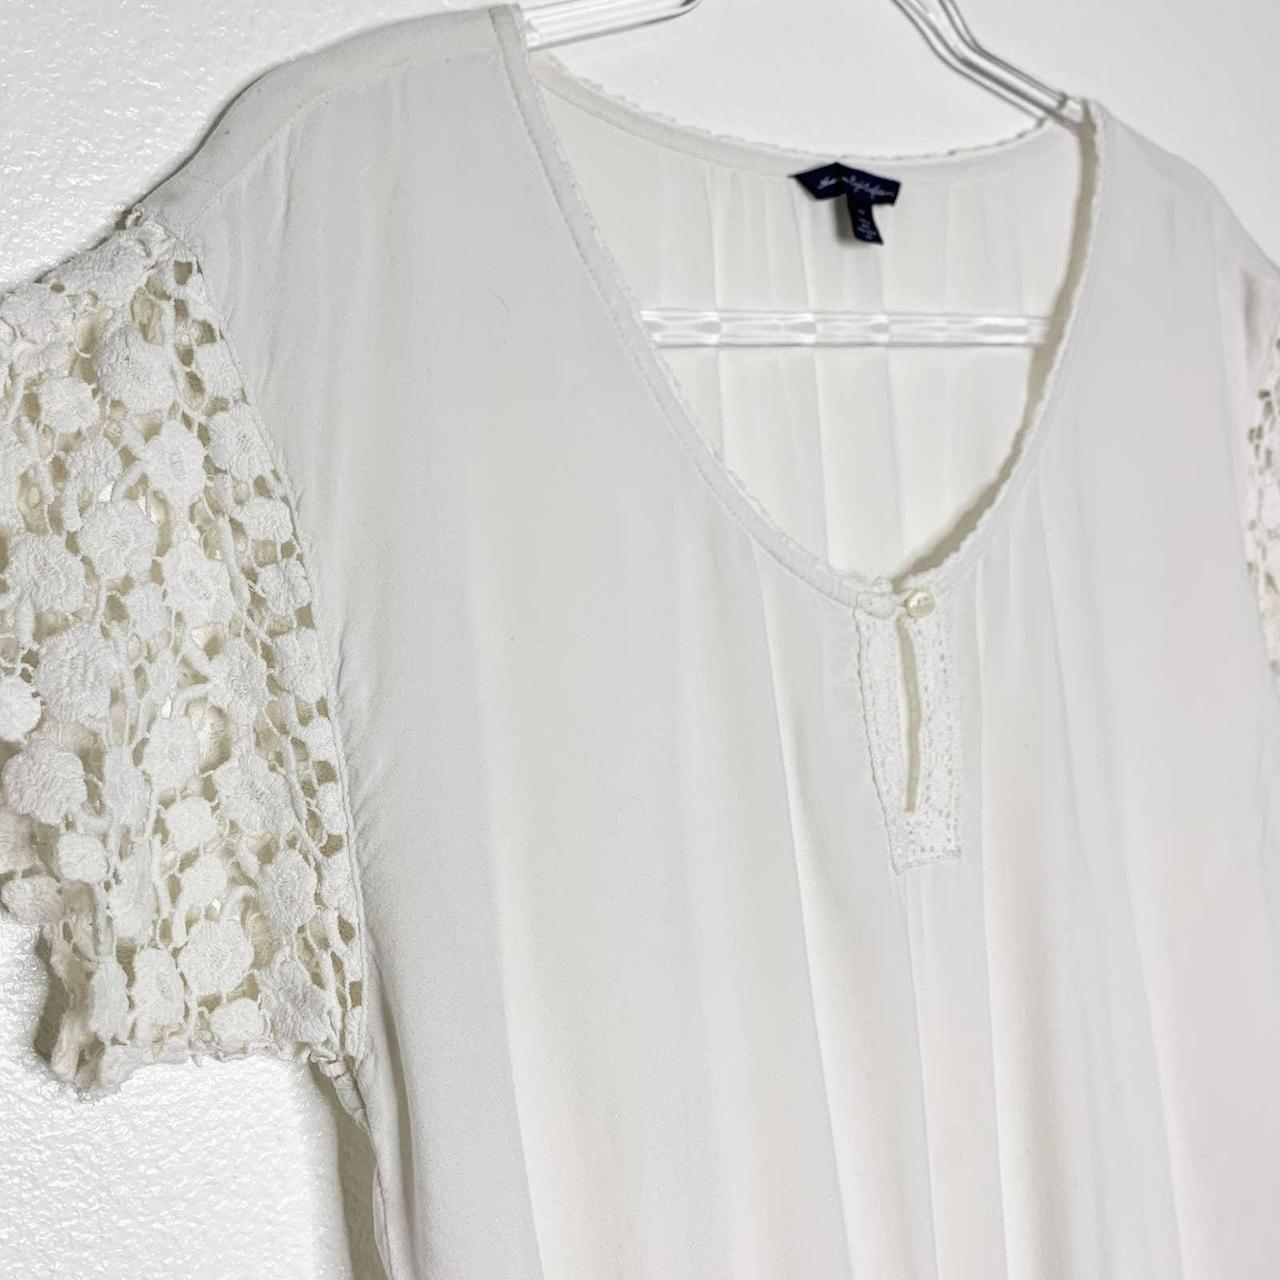 Product Image 3 - AMERICAN EAGLE White Crochet Sleeve